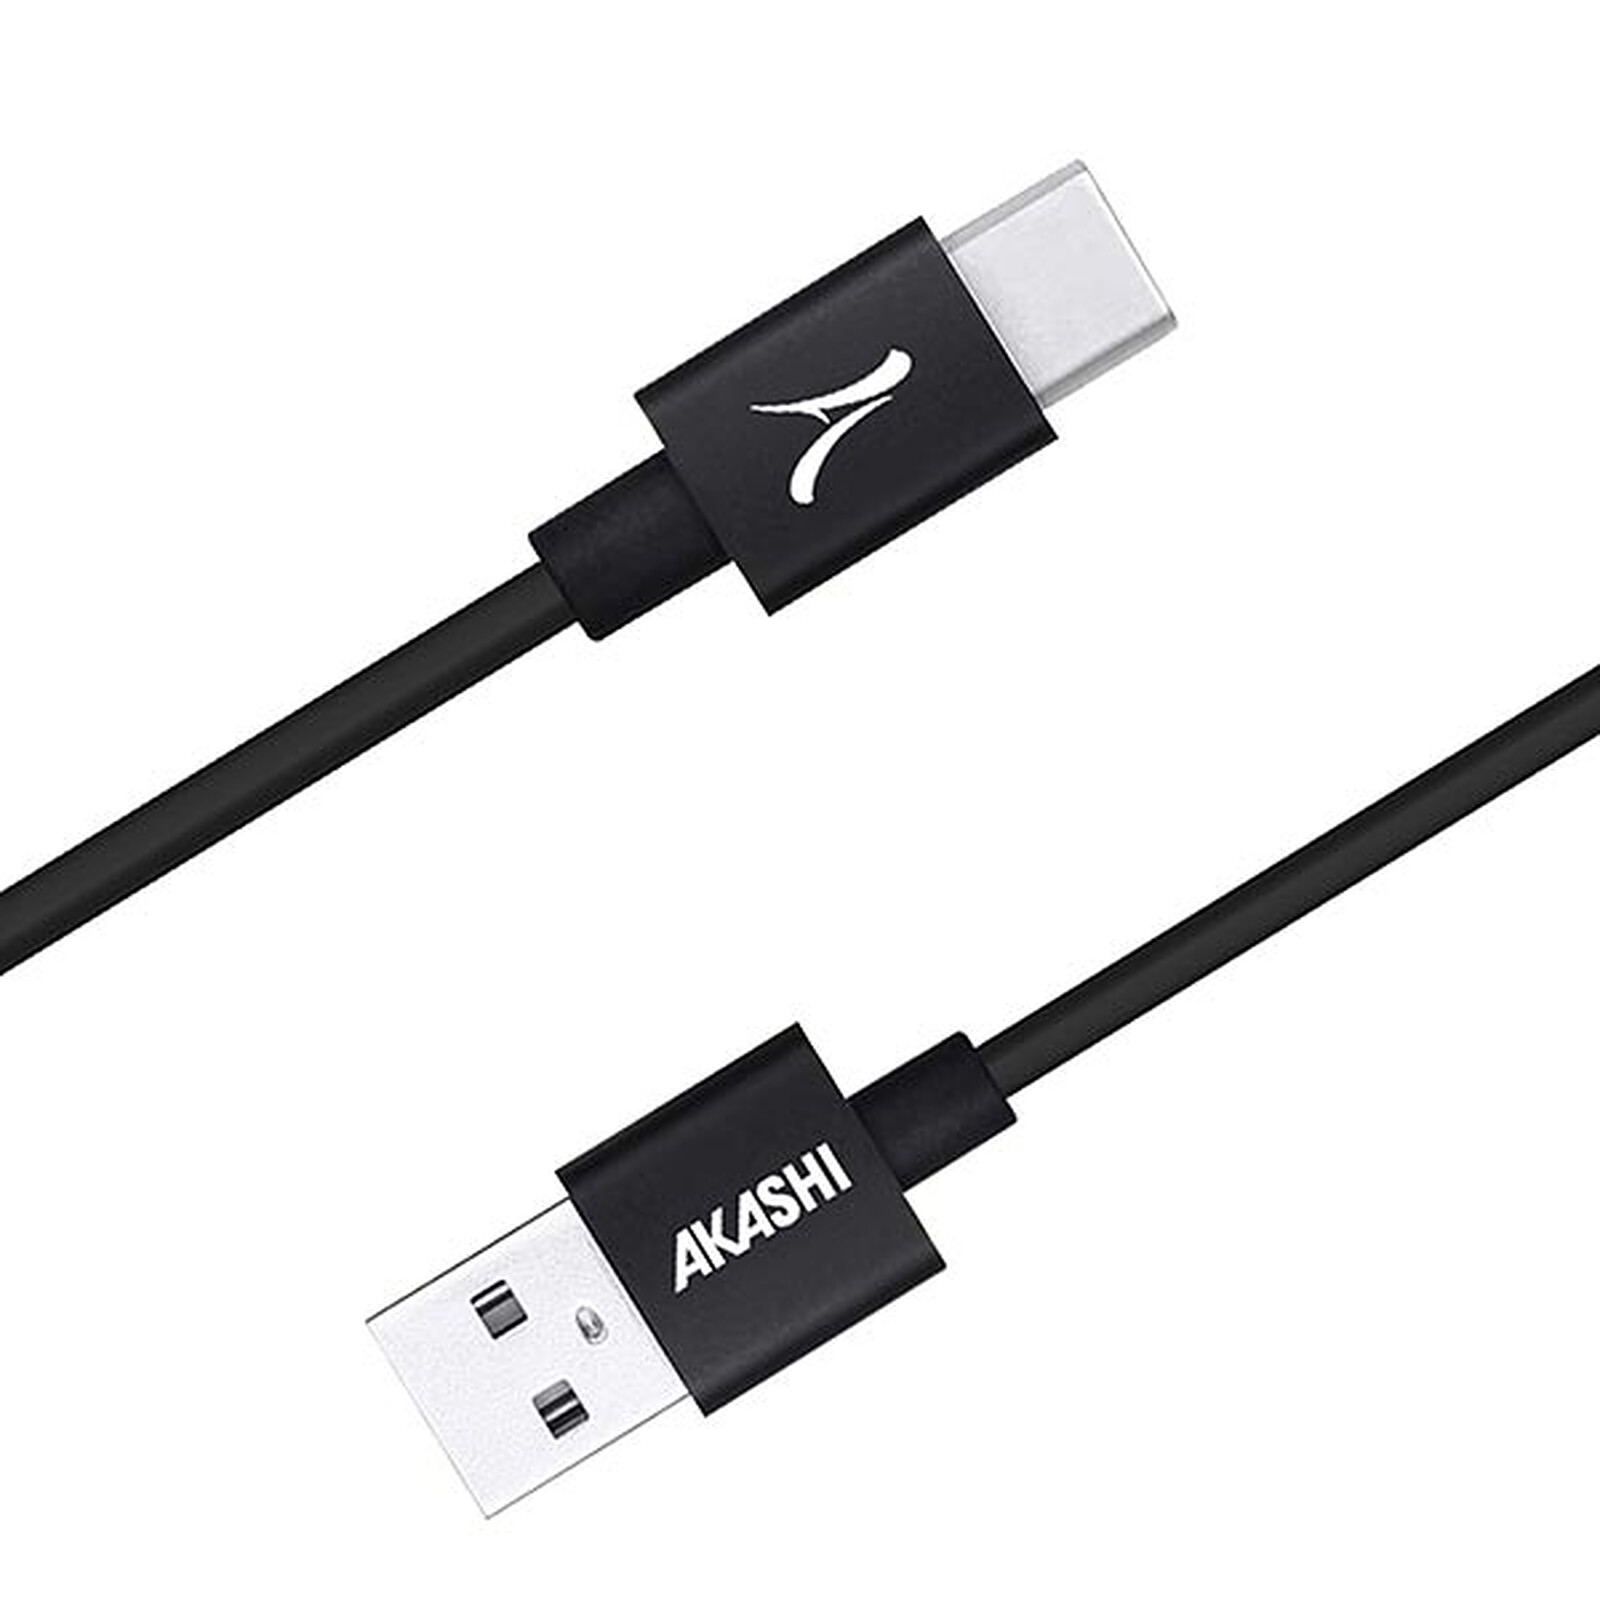 Cable USB tipo C a USB tipo C de 1 metro